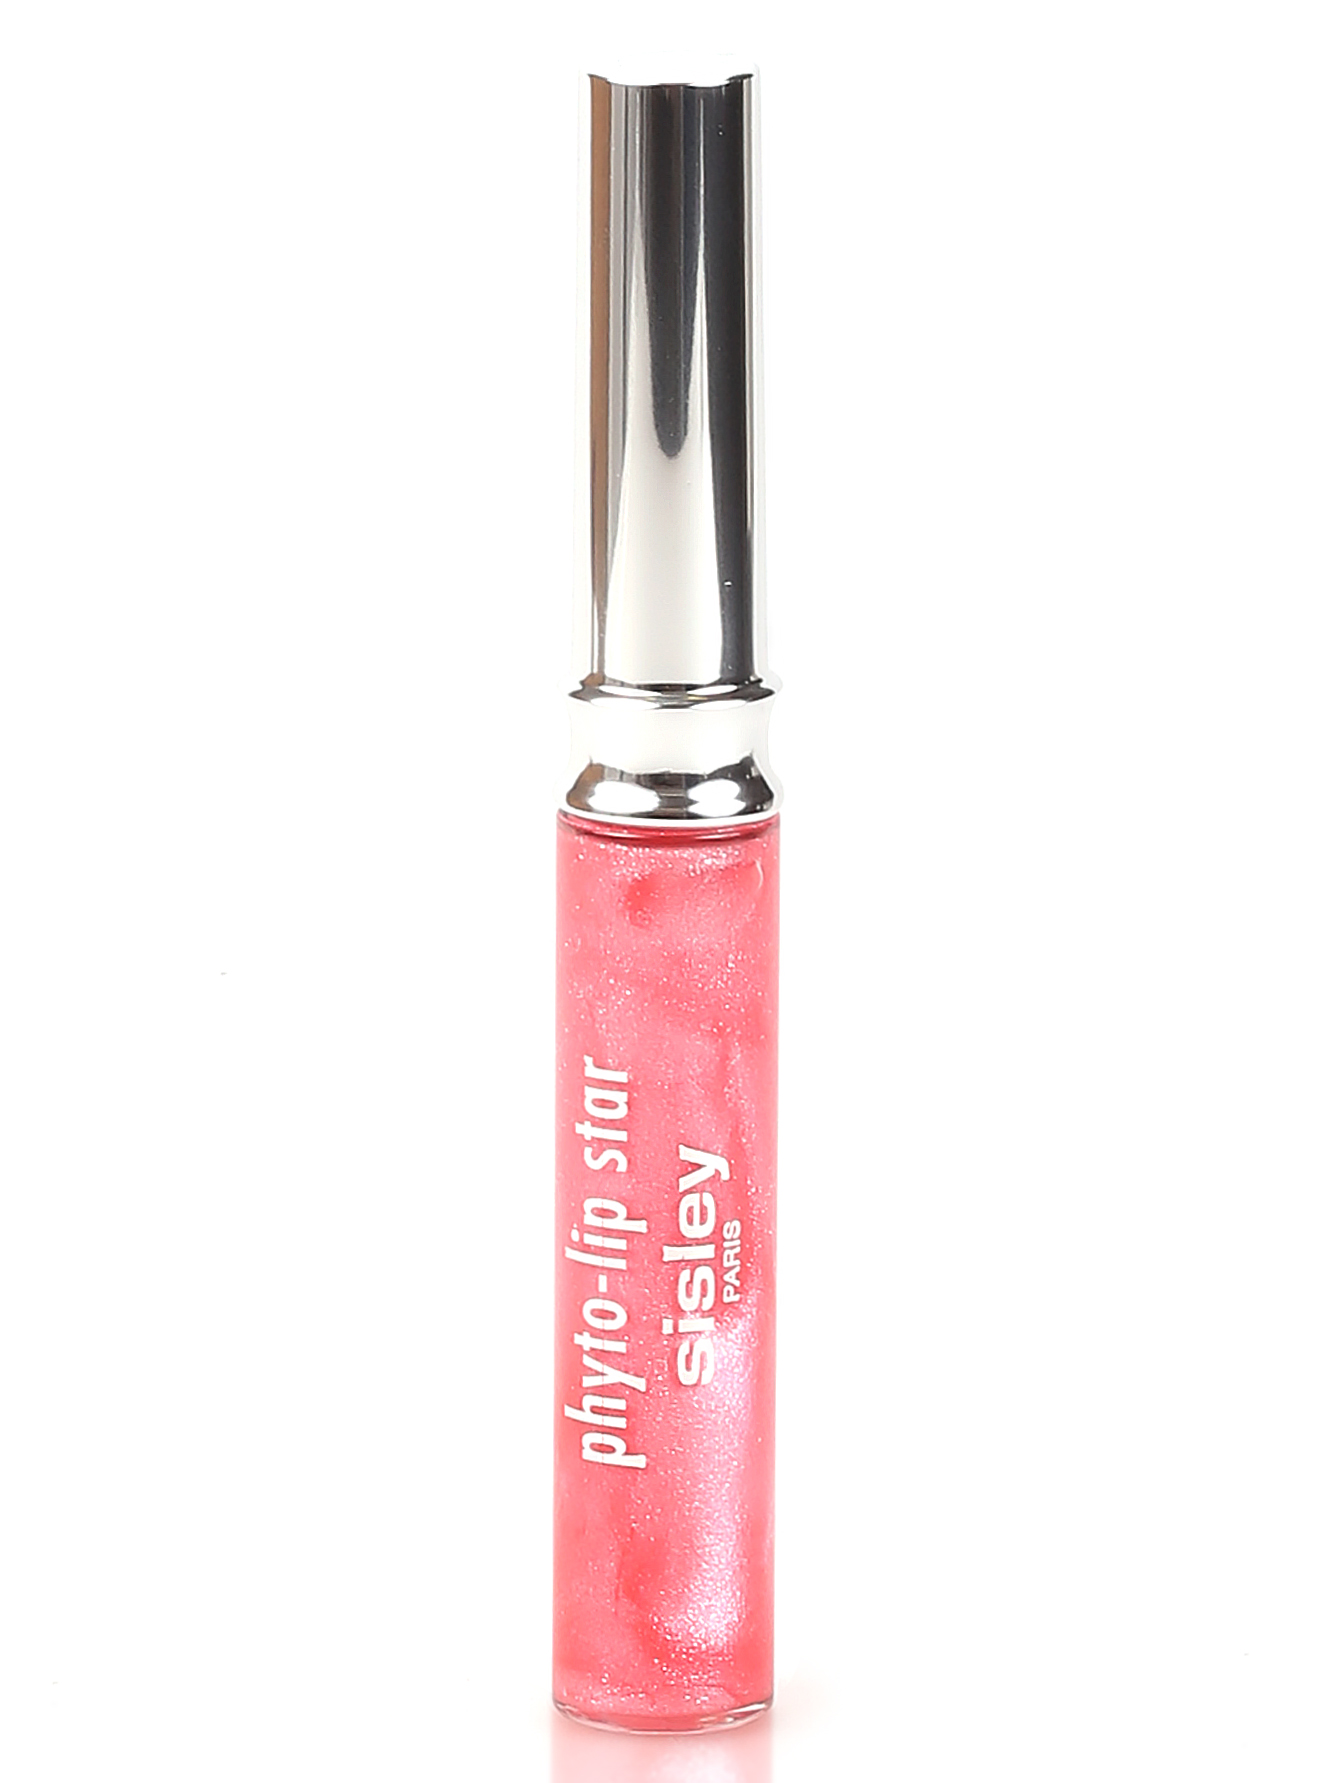 Блеск для губ - №2 Pink Sapphire, Phyto lip Star - Общий вид